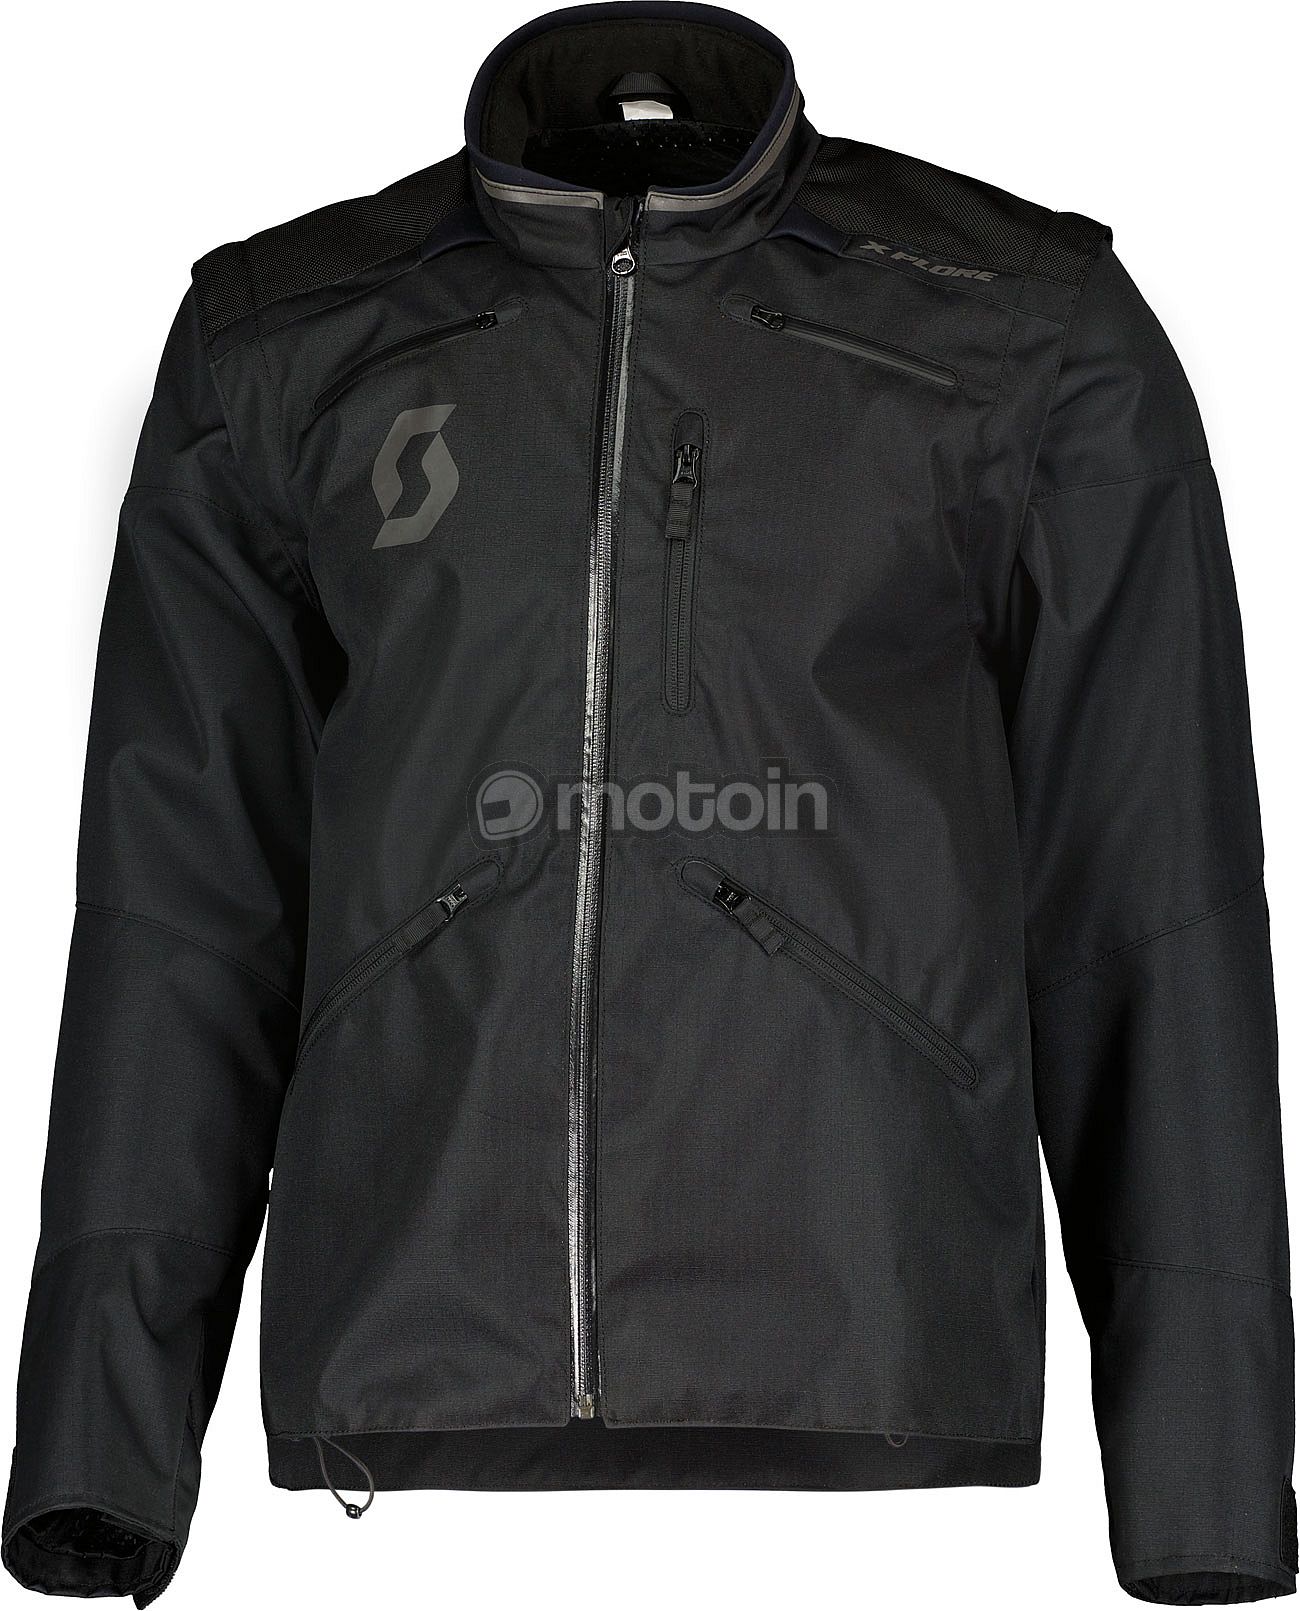 Scott X-Plore S23, текстильная куртка